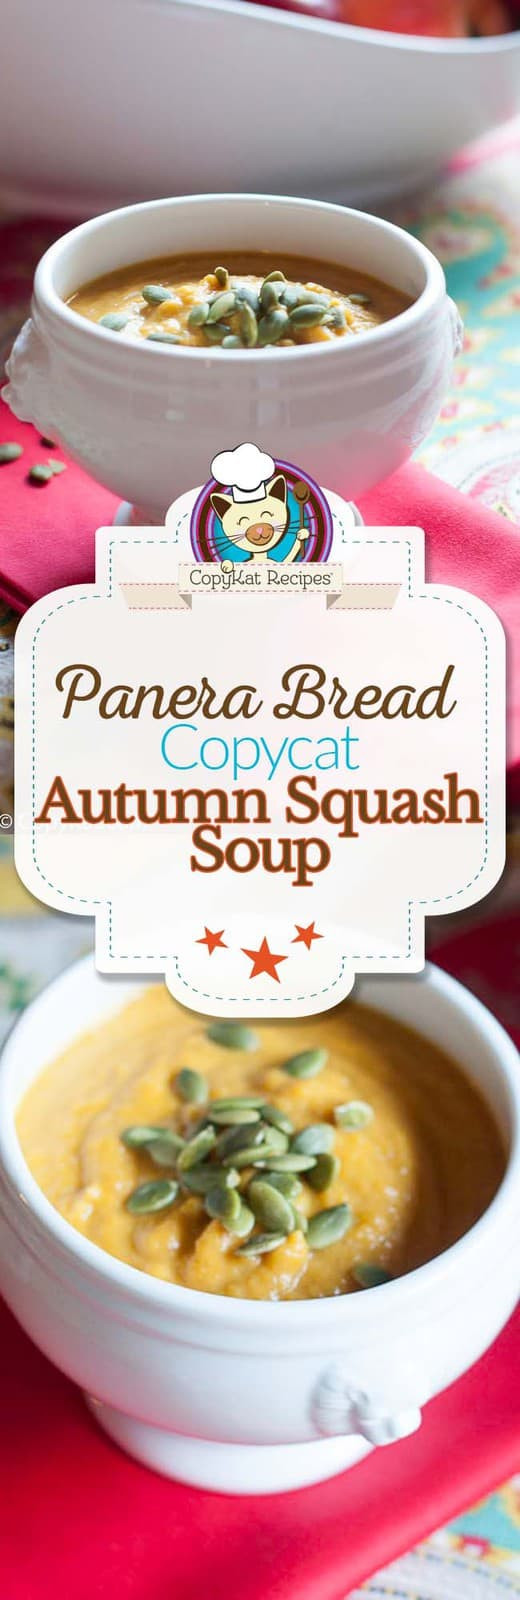 Panera Bread Autumn Squash Soup Recipes
 Make your own Panera Bread Autumn Squash Soup